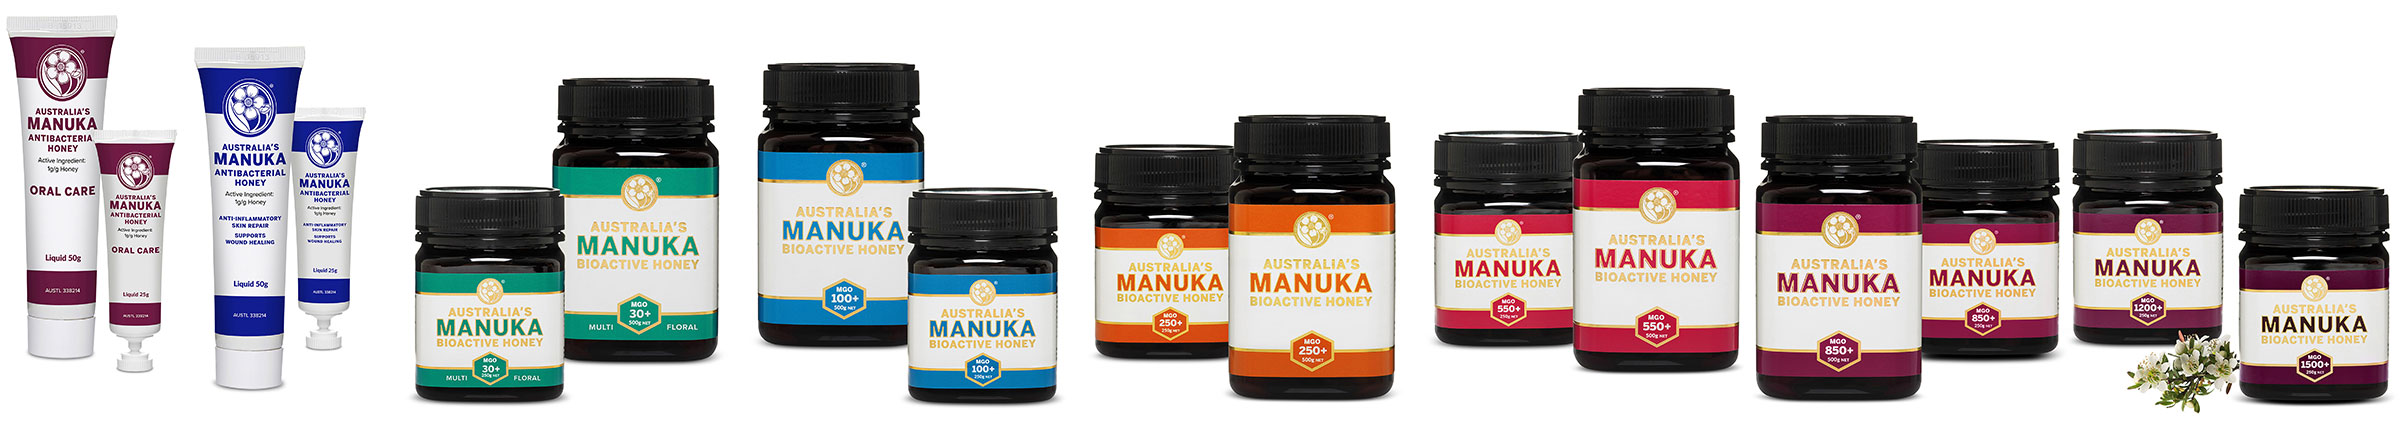 Australias Manuka Honey Full Range